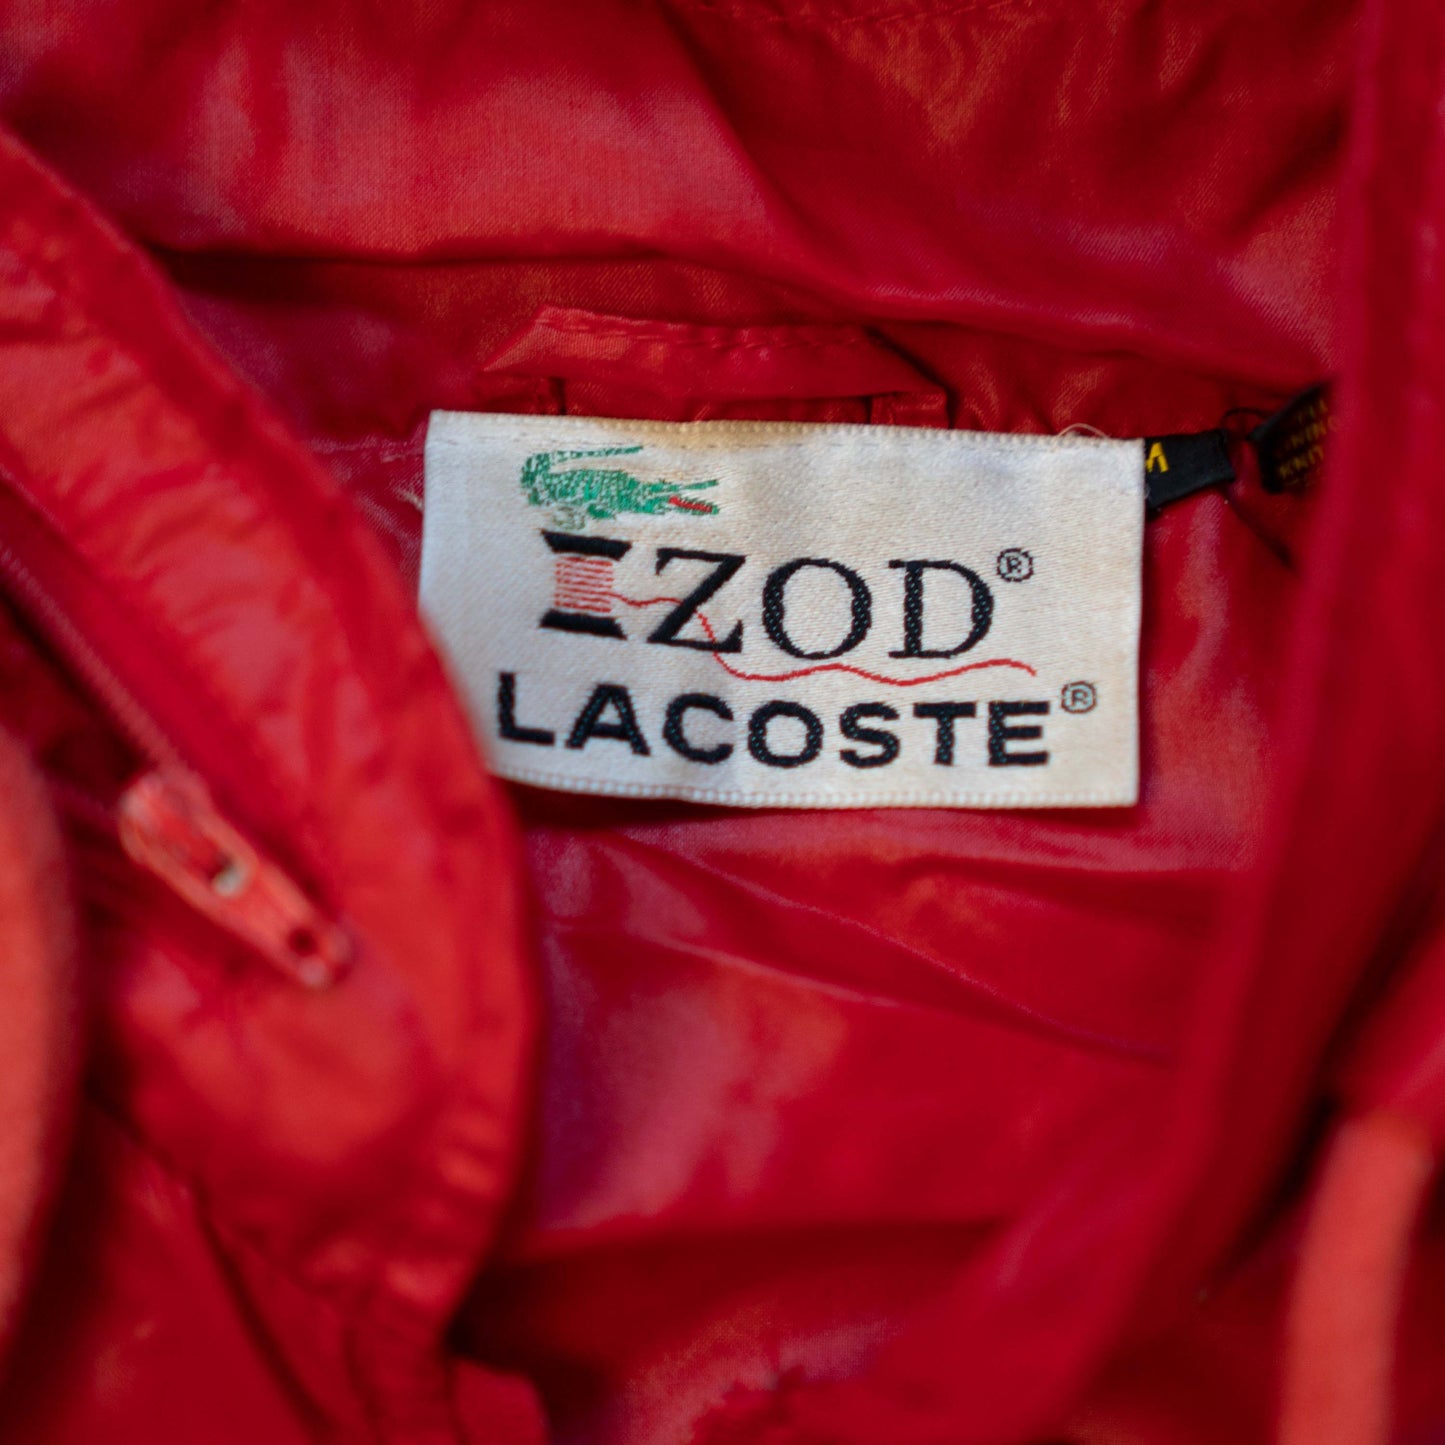 IZOD Lacoste Collector's Trackjacket 1960s